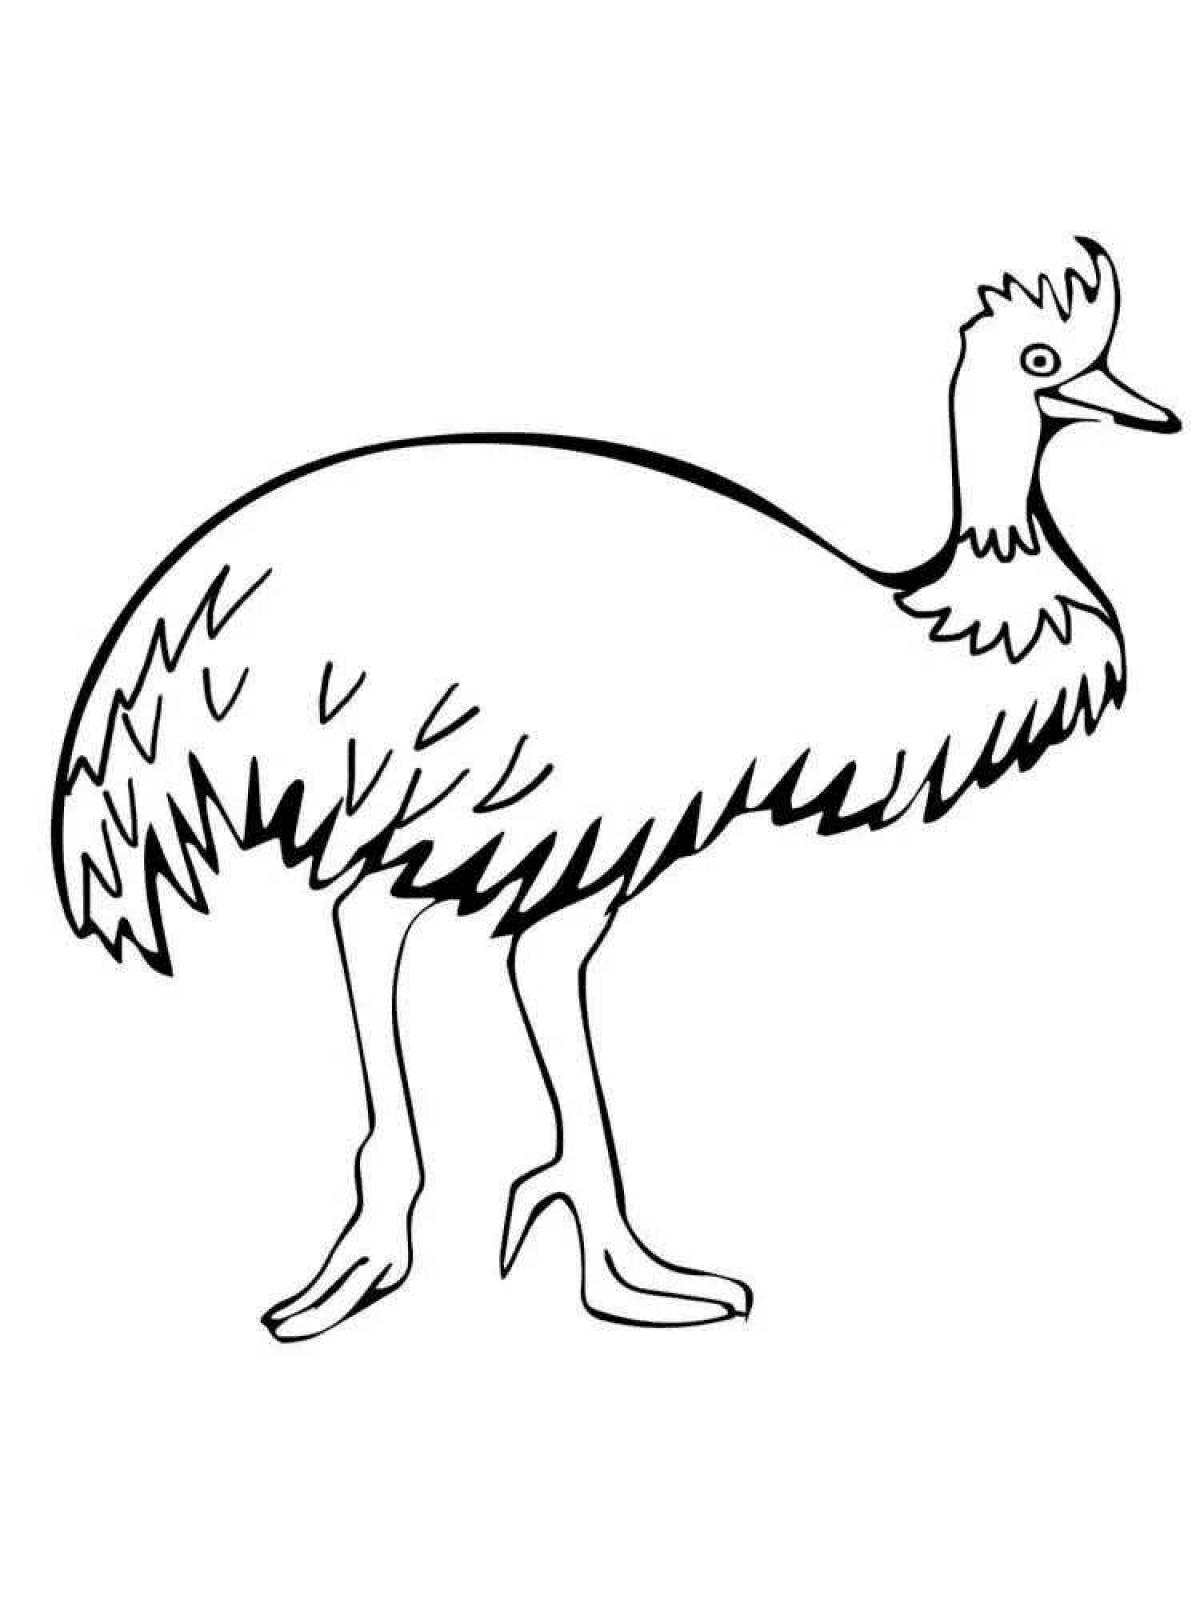 Magic emu coloring page